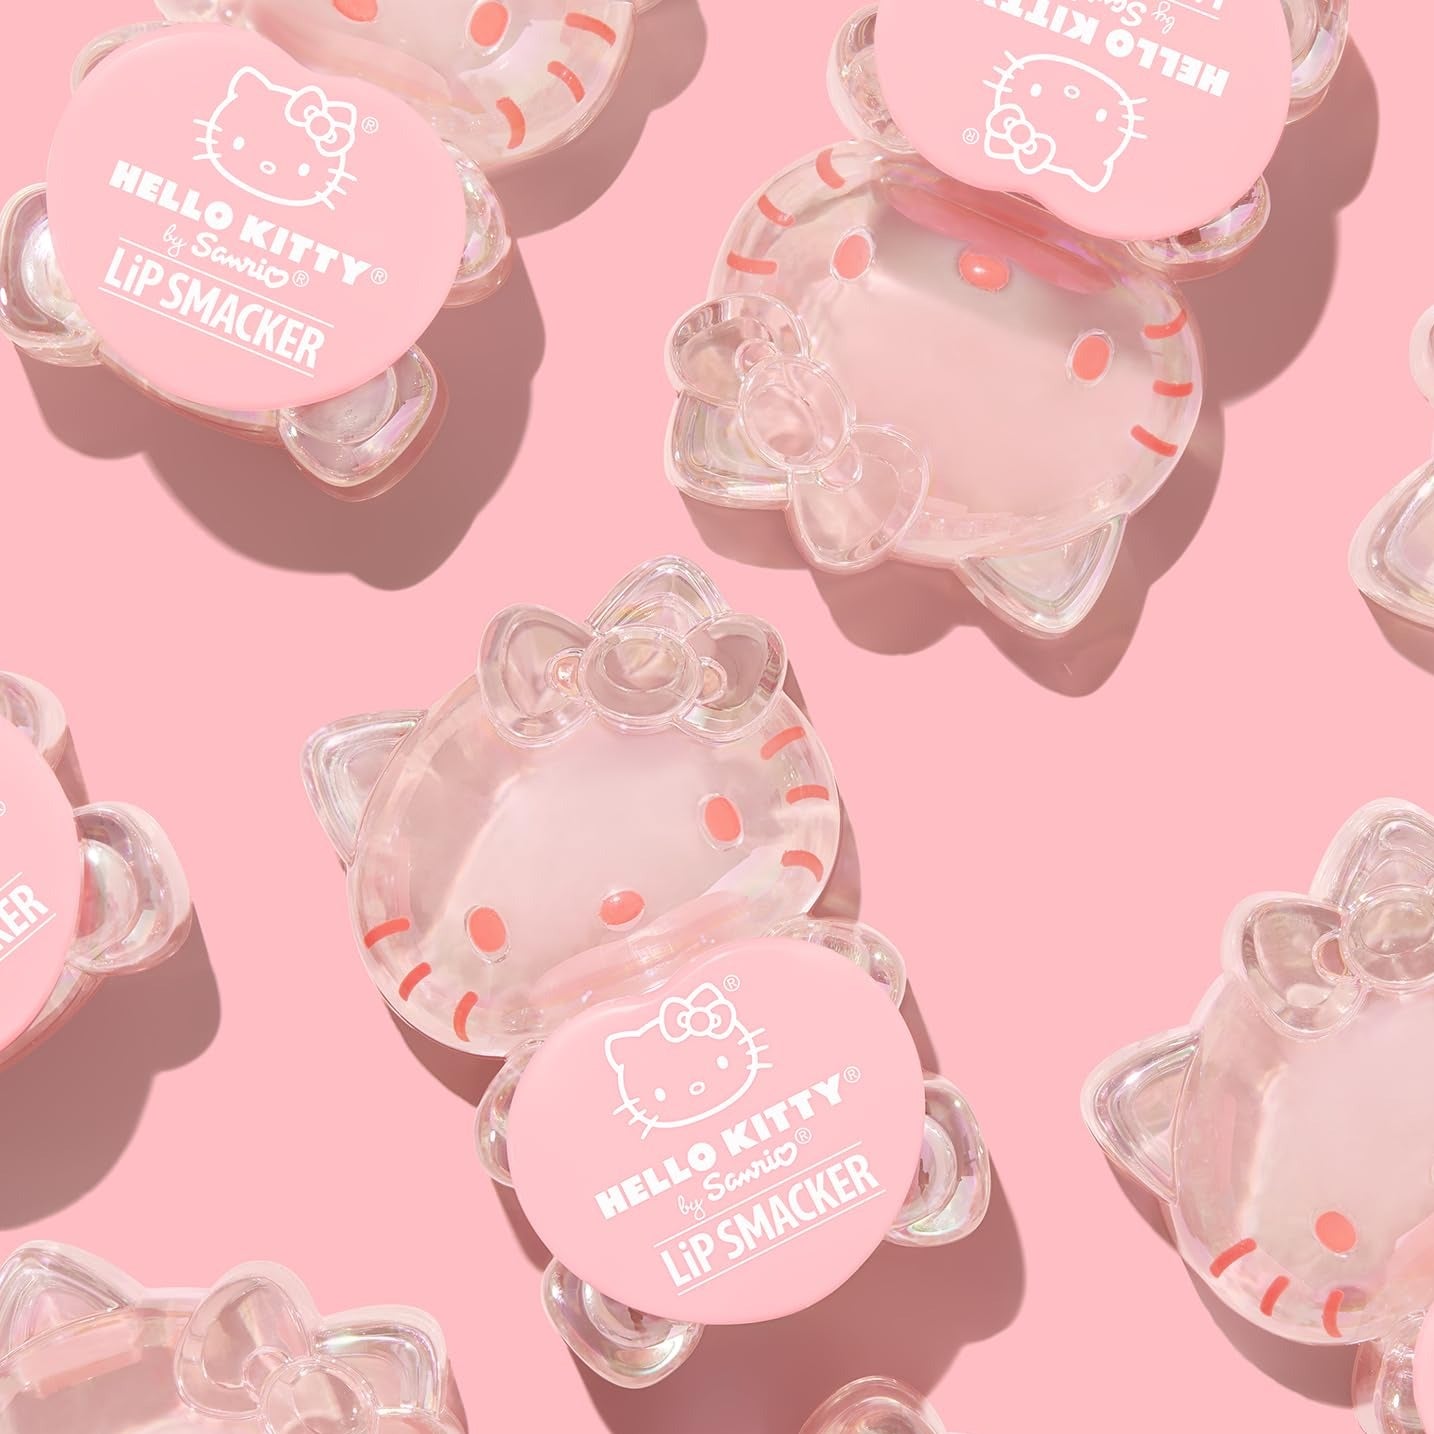 Hello Kitty x Lip Smackers Gummy Lip Balm Beauty MARKWINS   